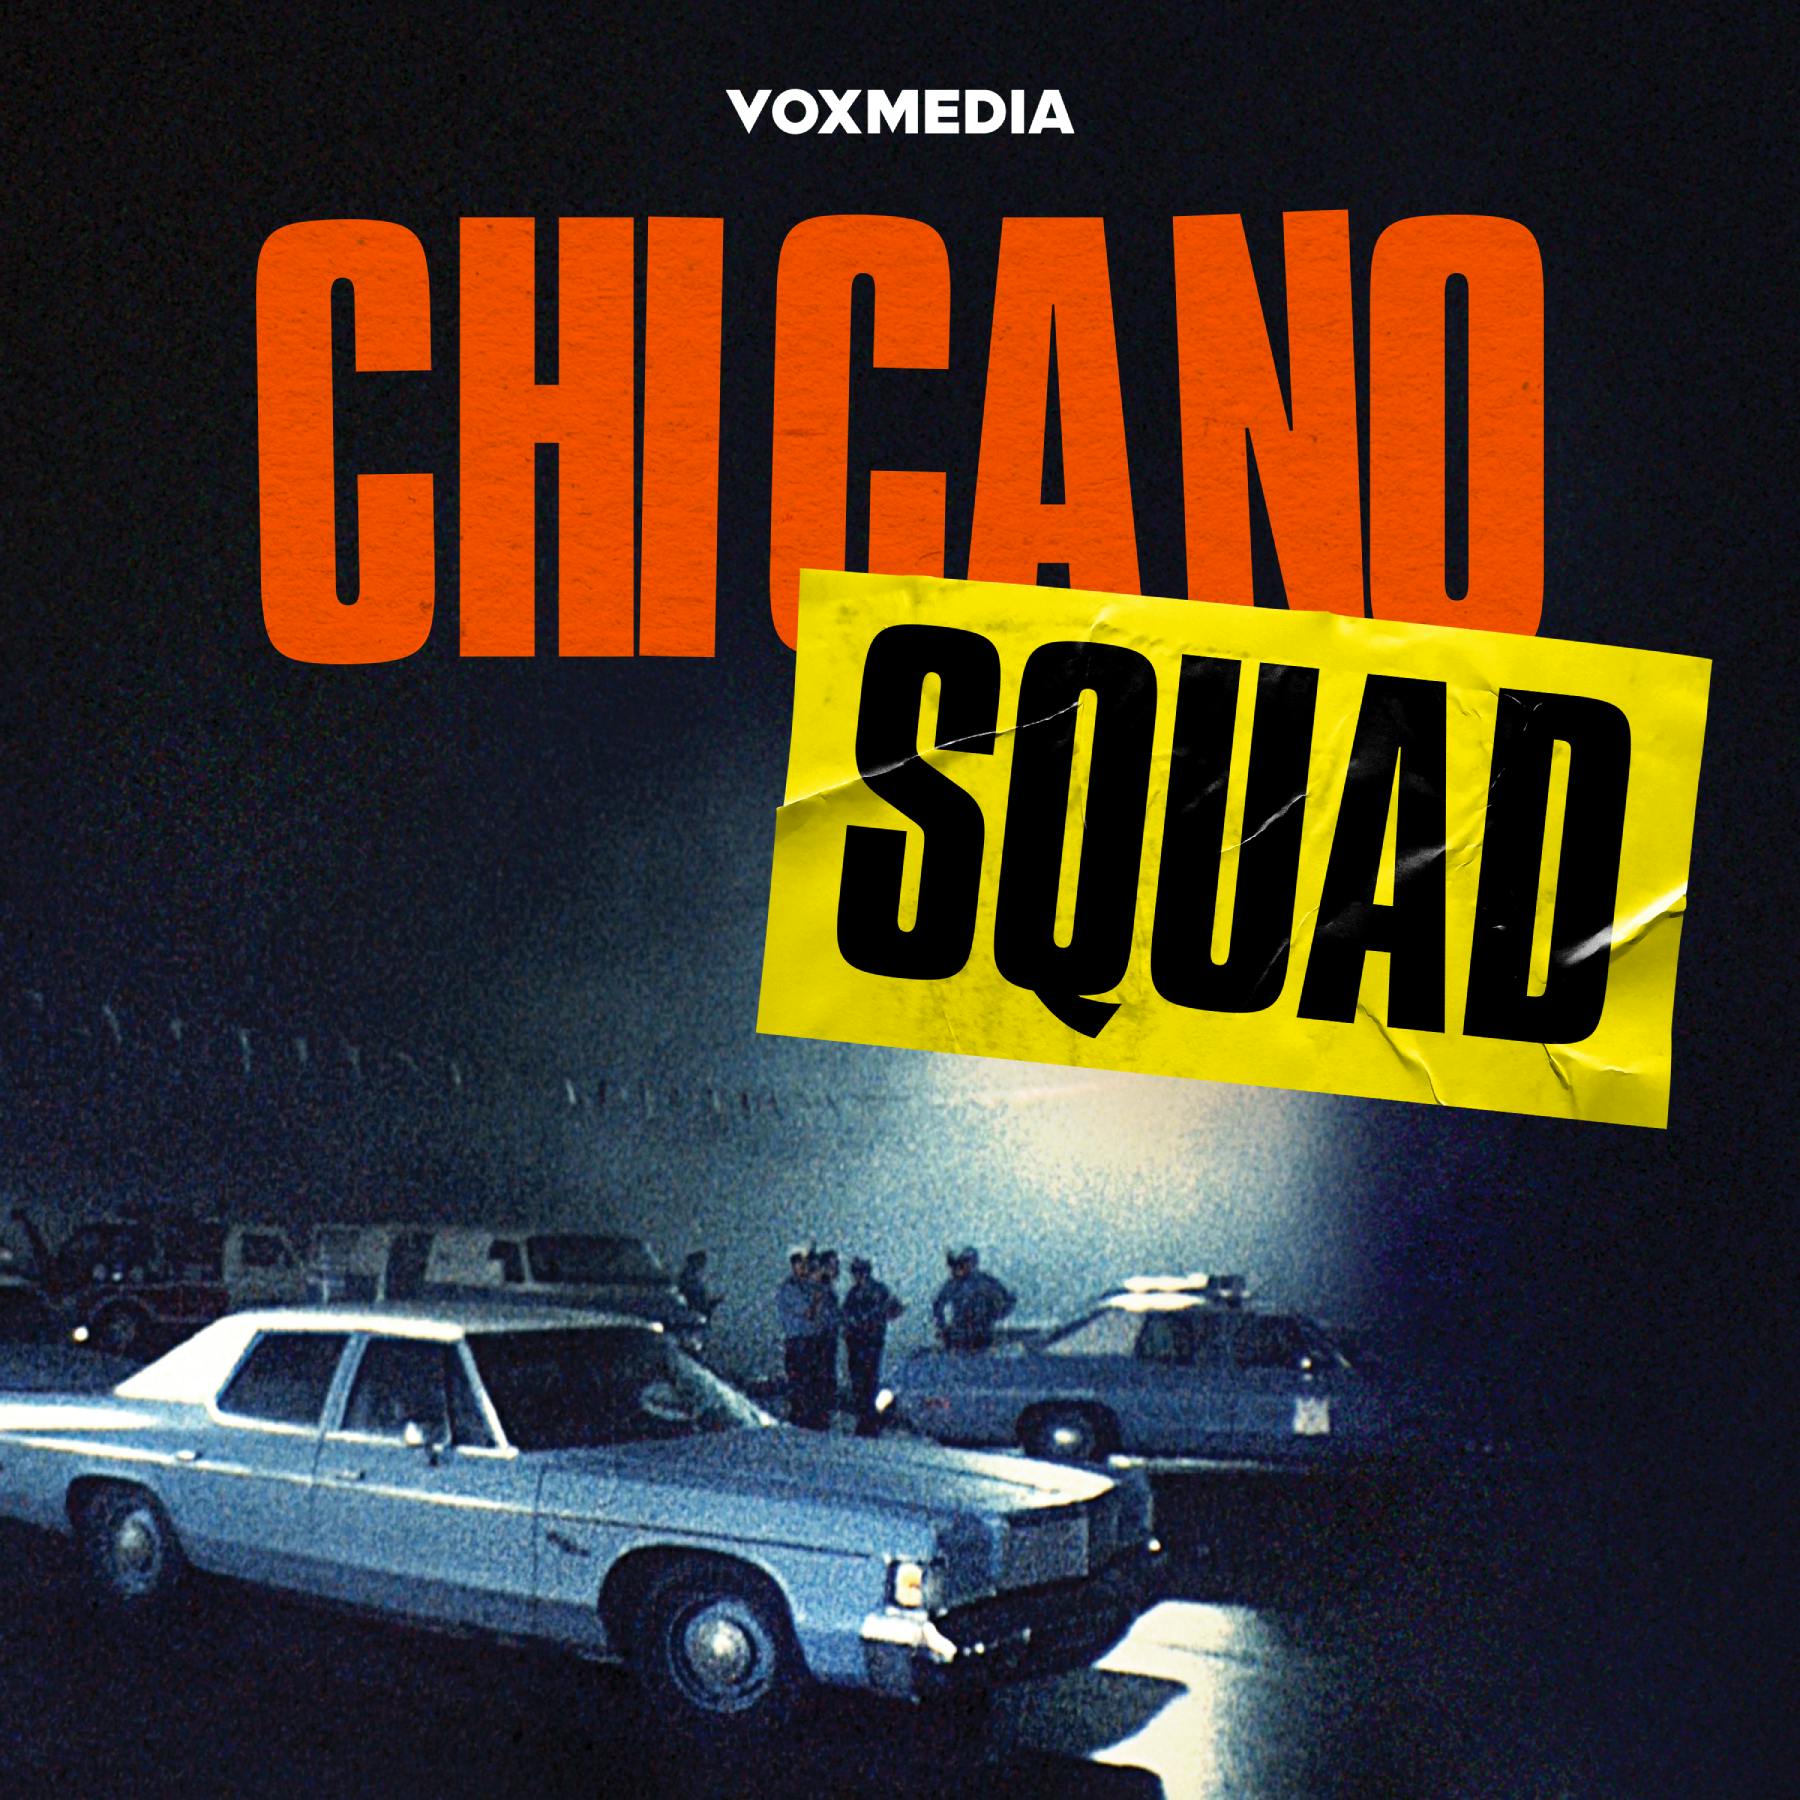 Chicano Squad podcast show image